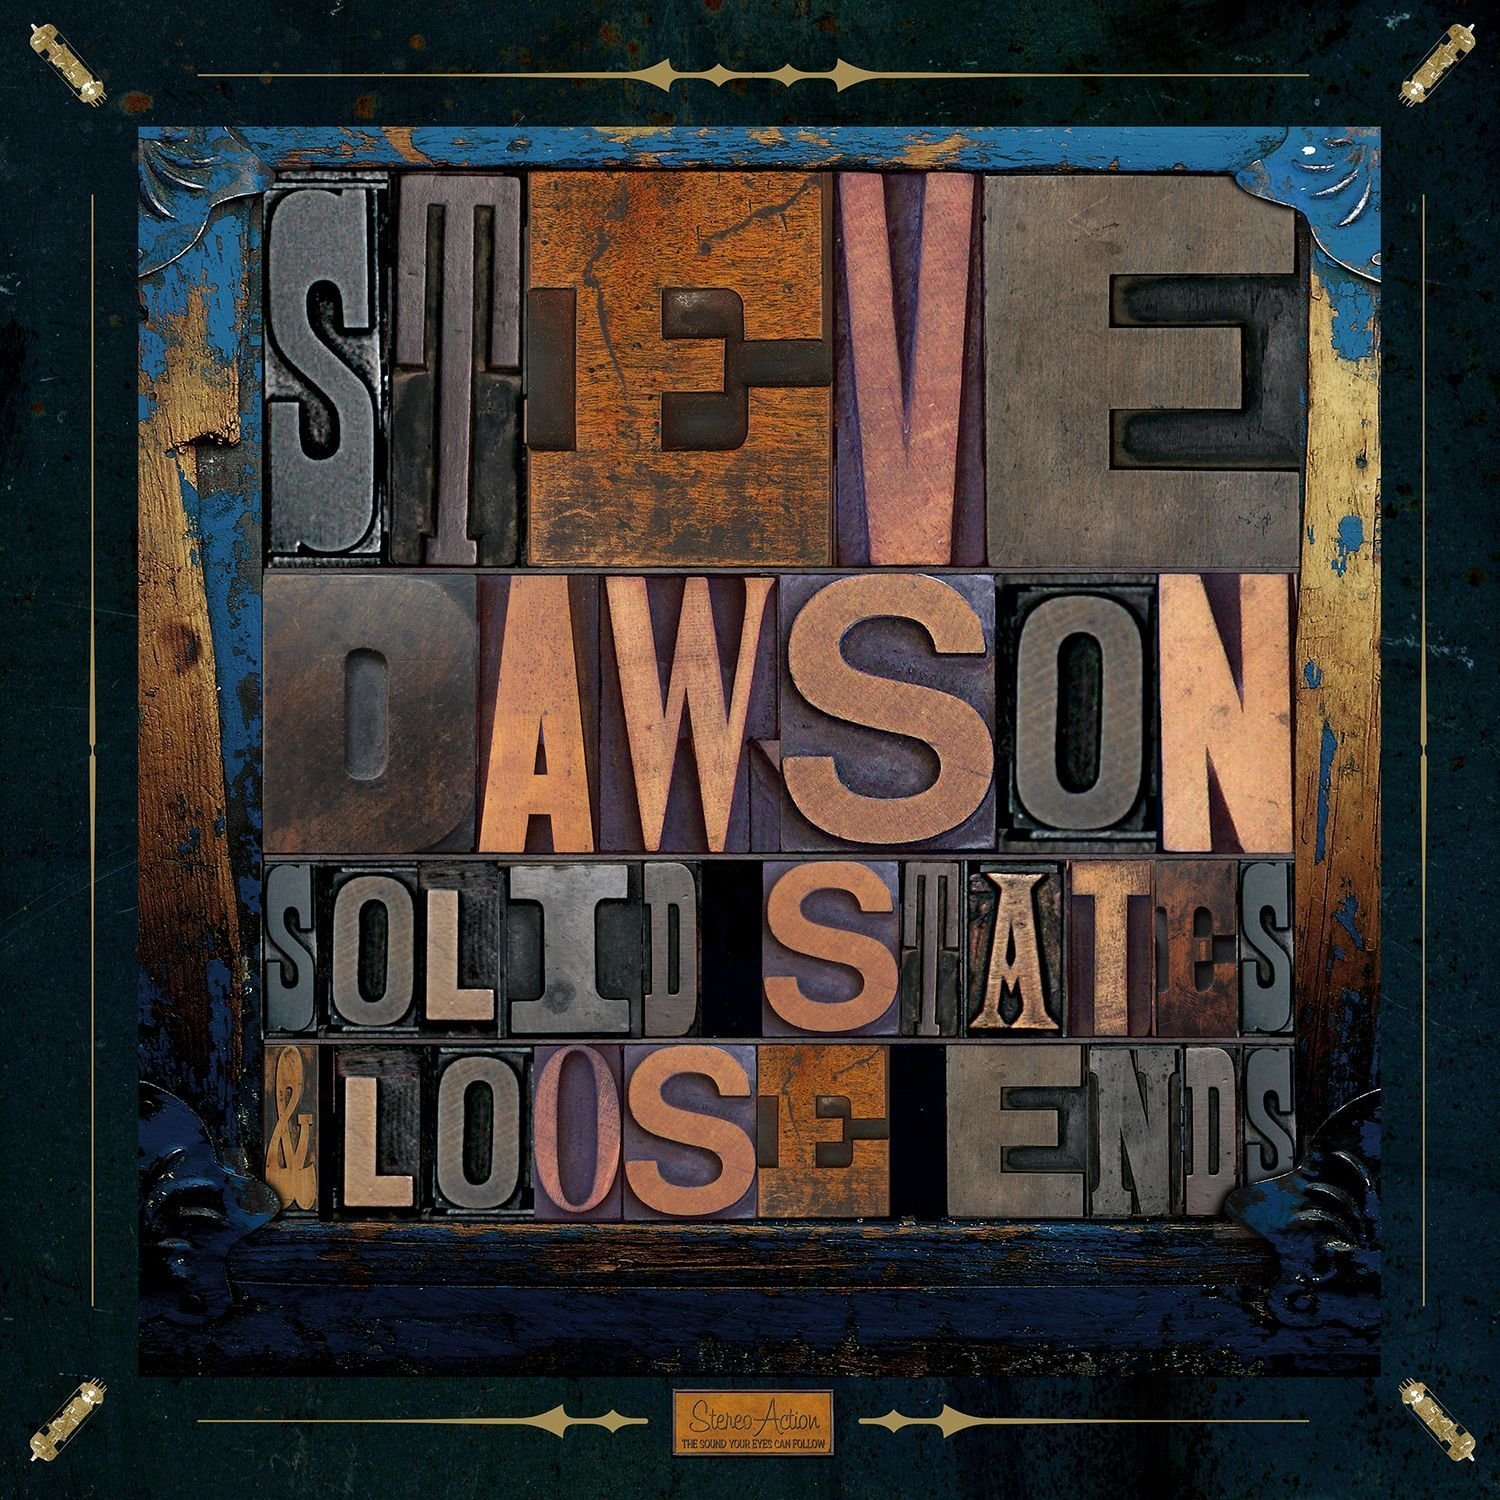 Dawson, Steve - Solid State & Loose Ends (2lp 180 Gram Vinyl / Plus Download Card)